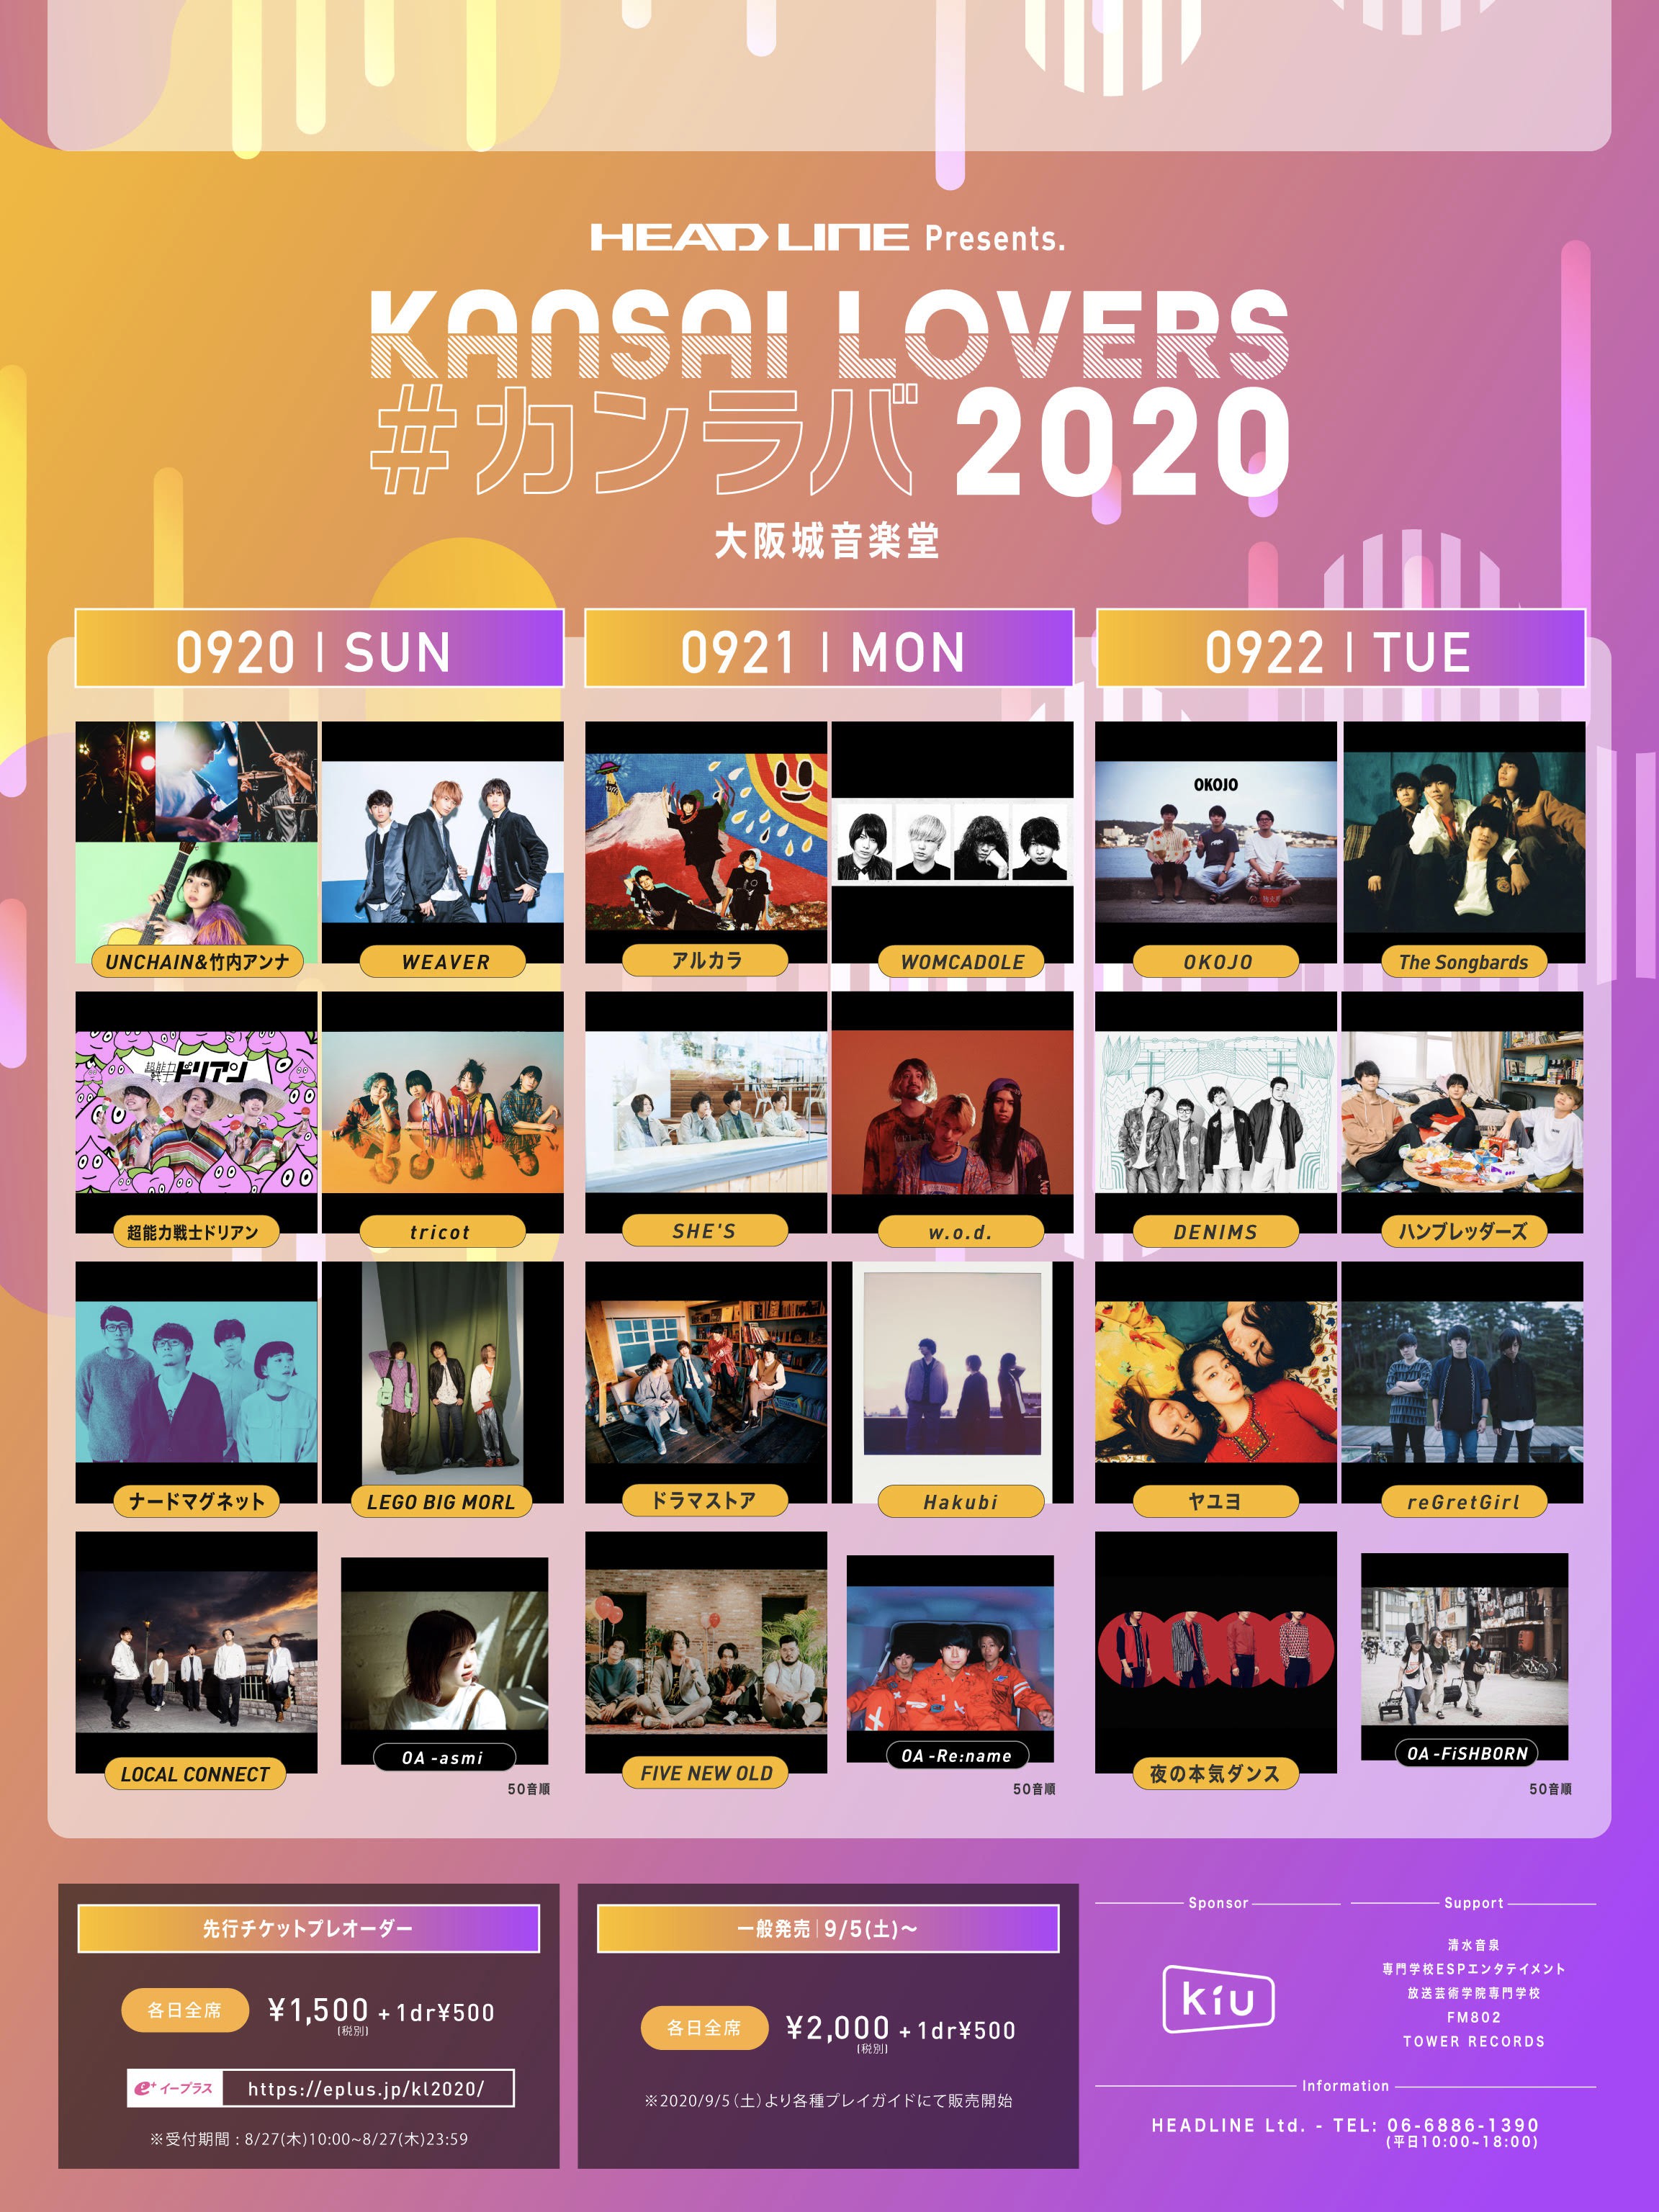 KANSAI LOVERS 2020